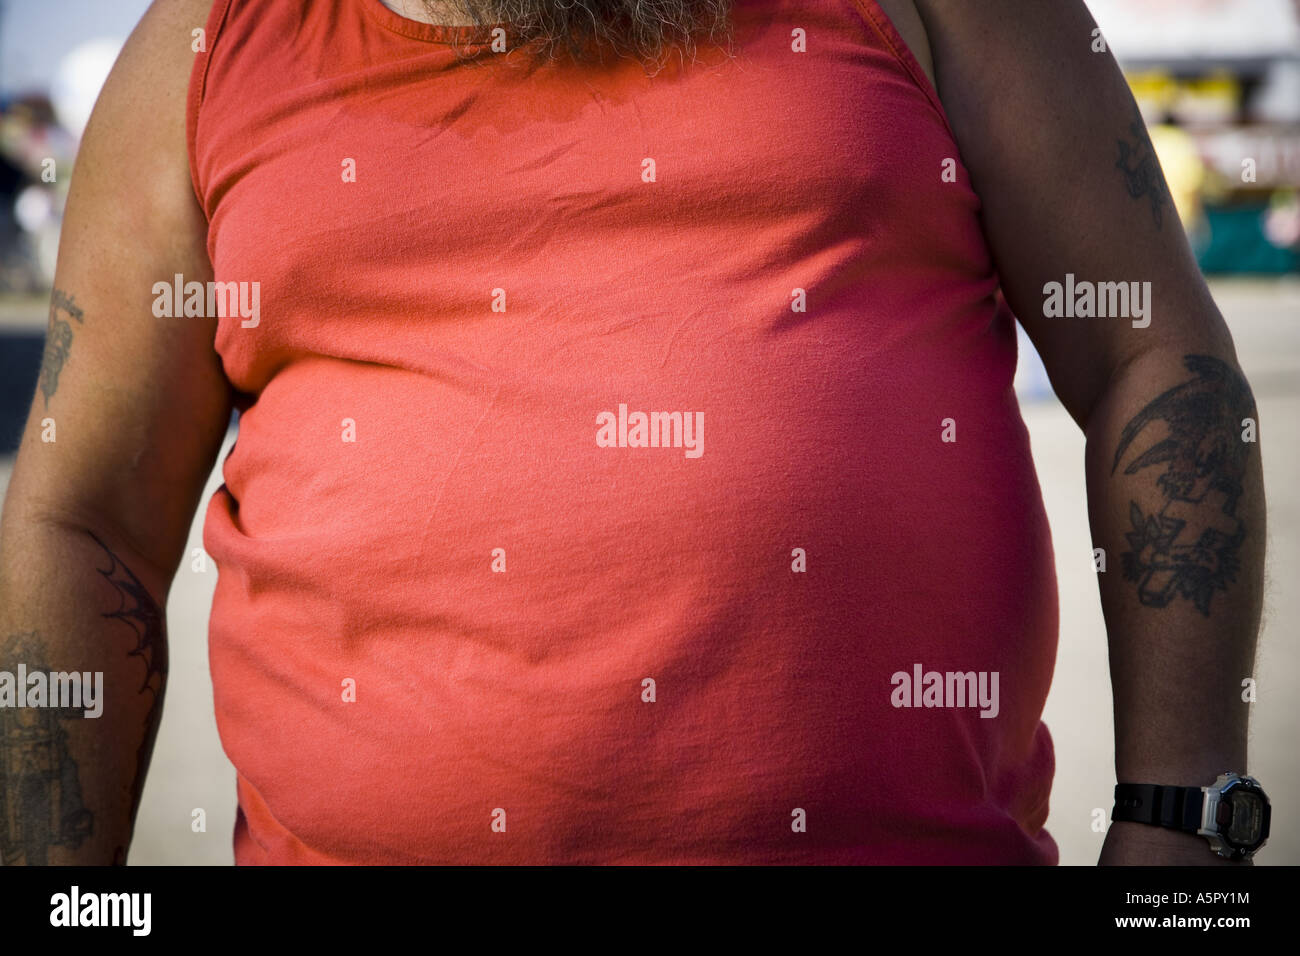 Large stomach Stock Photo